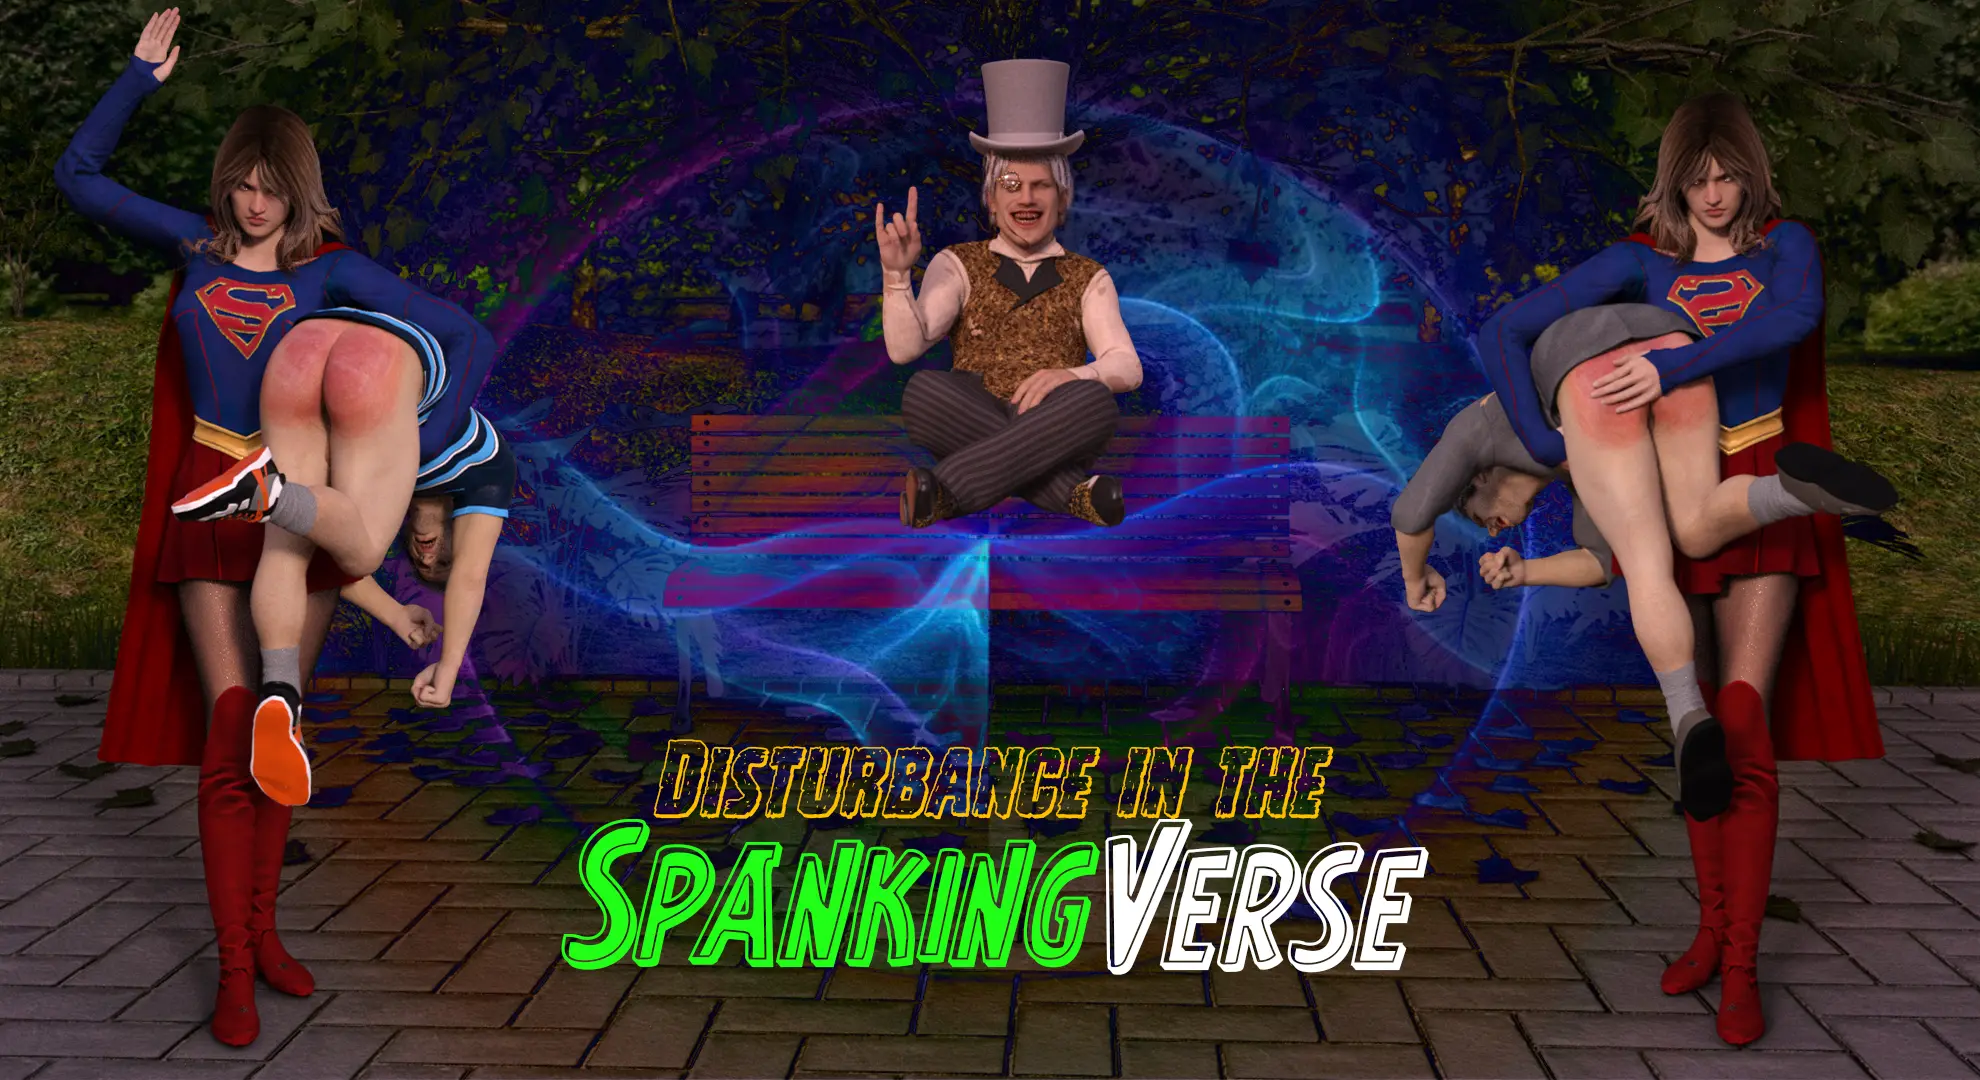 Disturbance in the Spankingverse main image